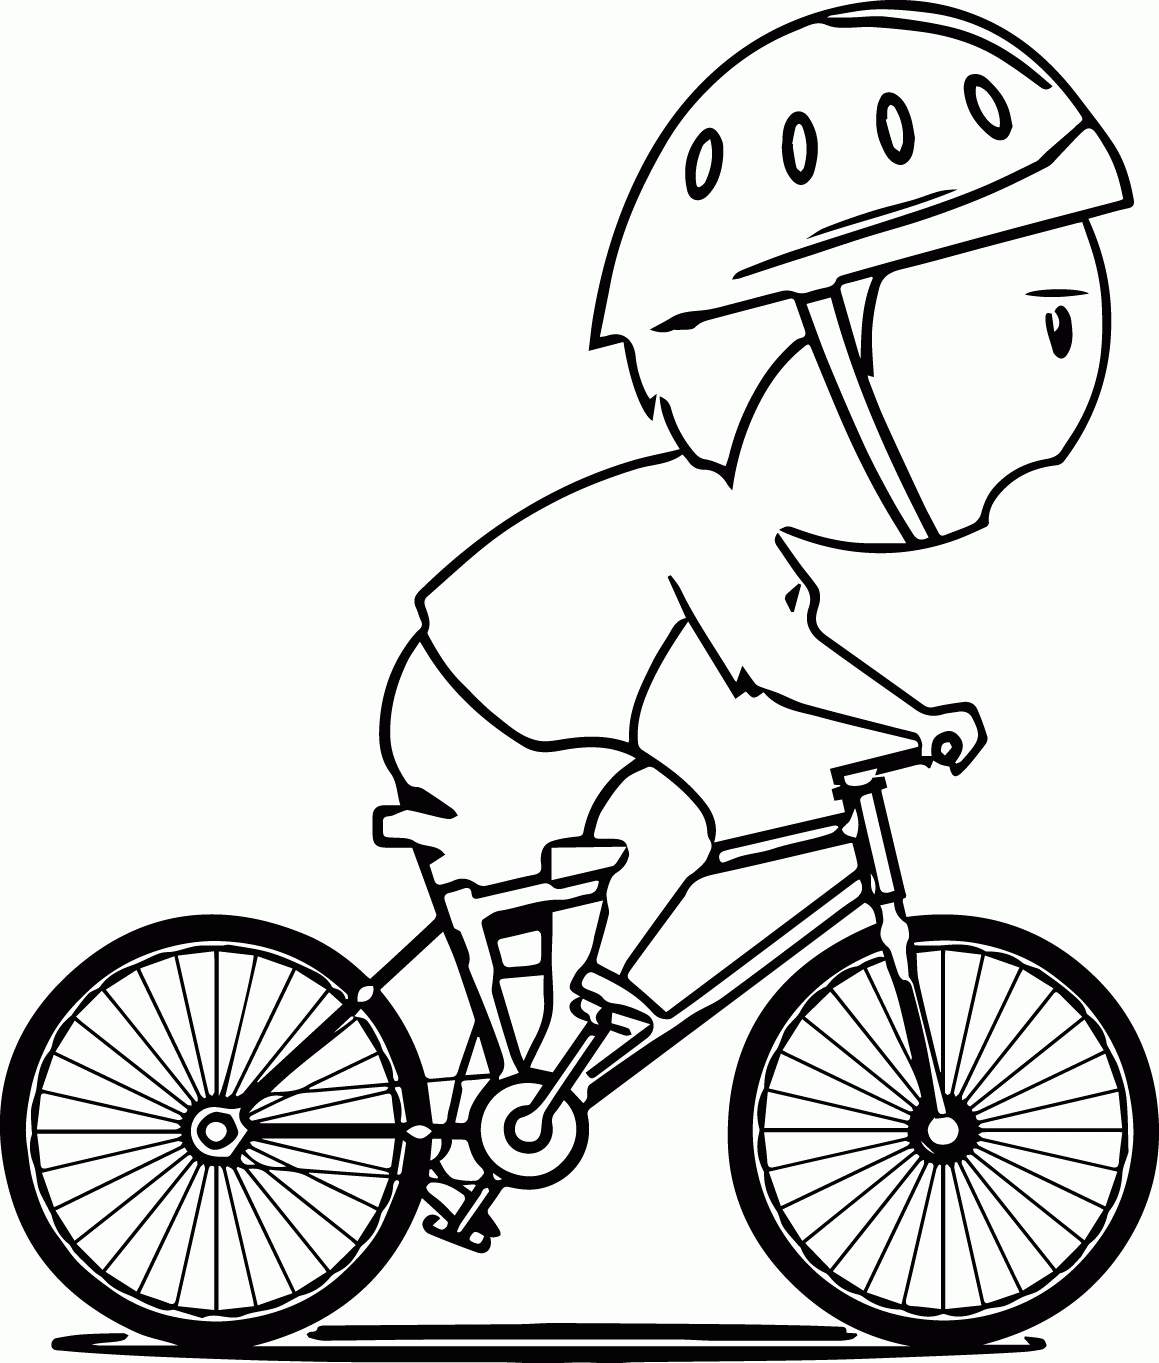 Boy On Bike Coloring Page | Wecoloringpage